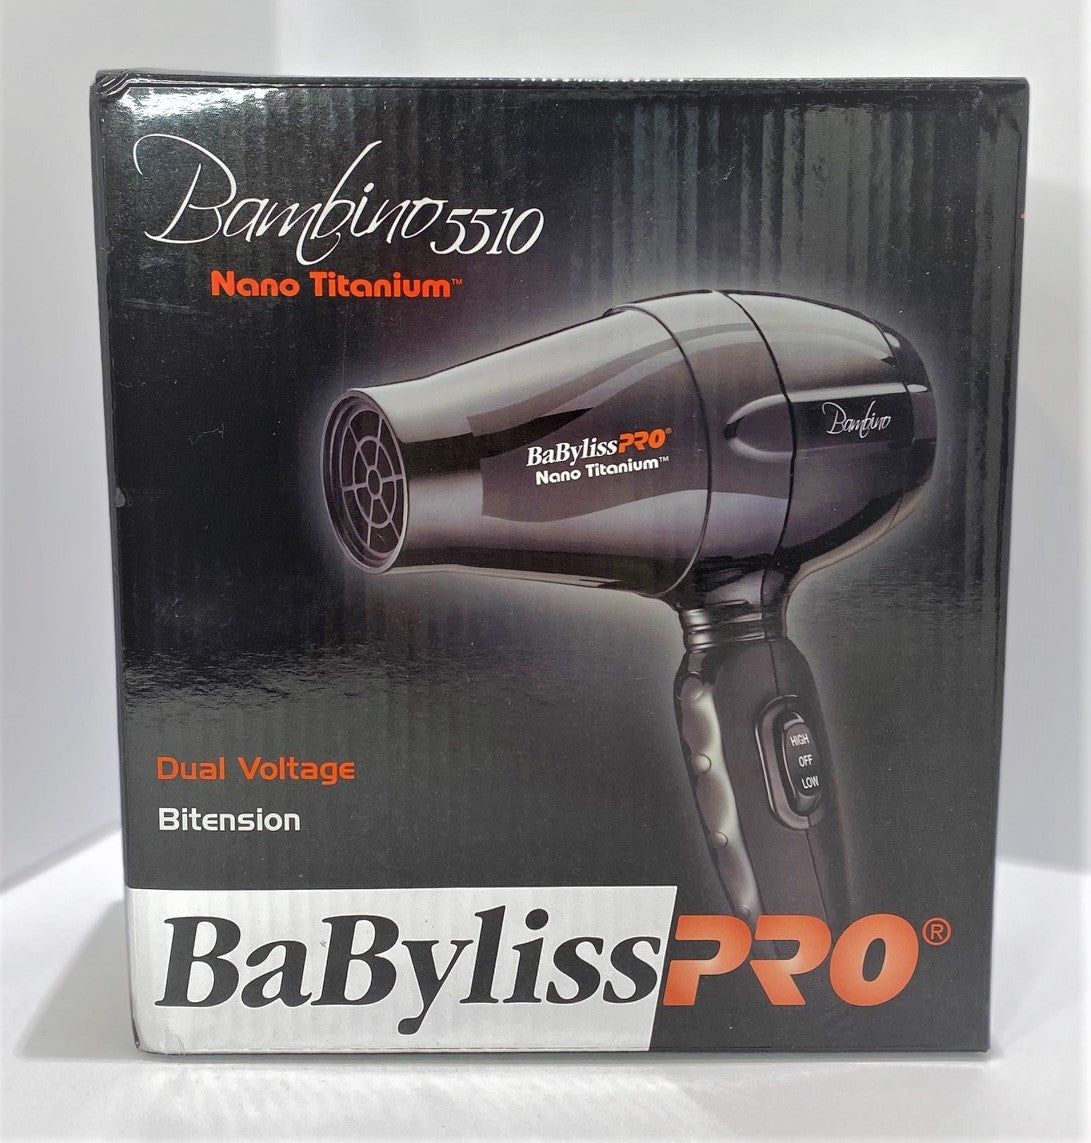 Babyliss Pro dryer Bambino 5510